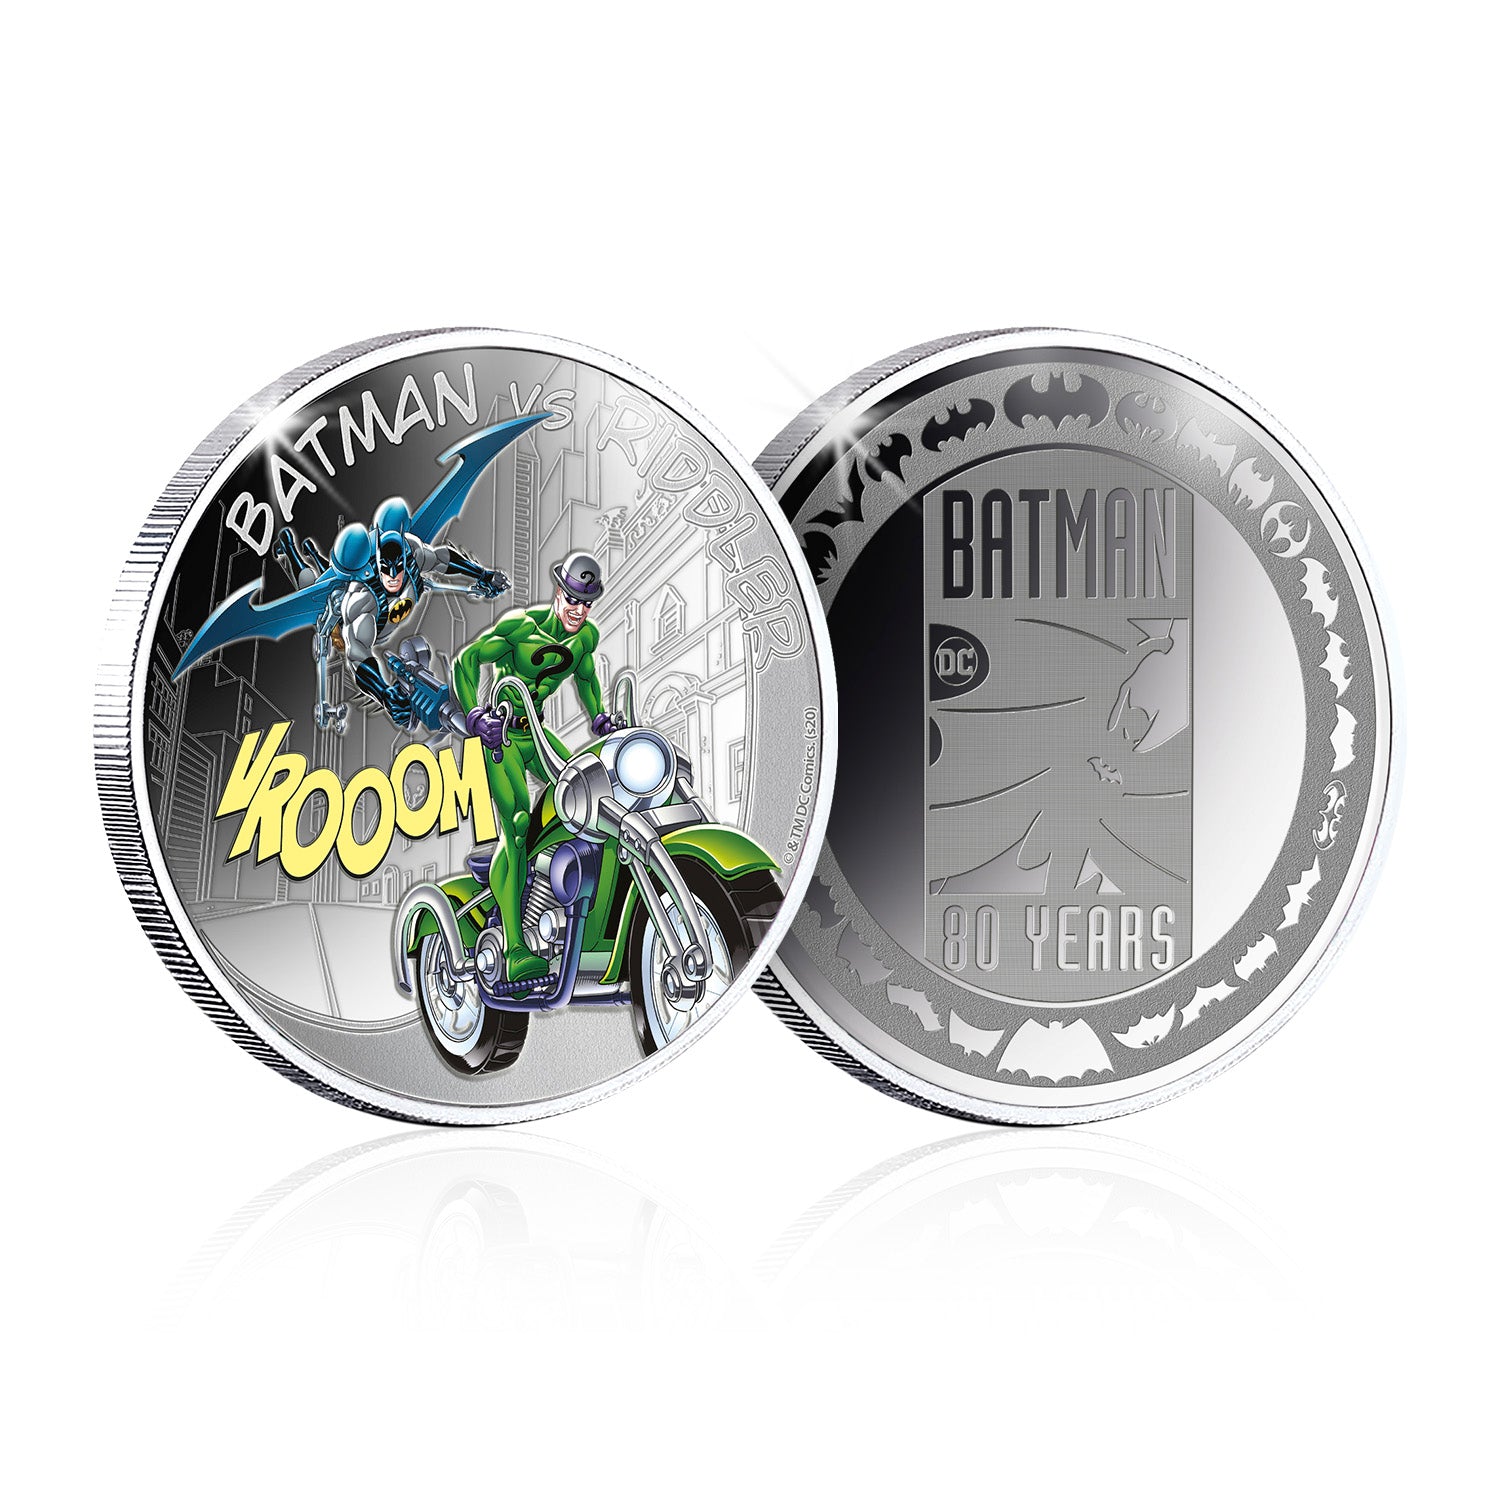 Batman vs Riddler Silver-Plated Commemorative